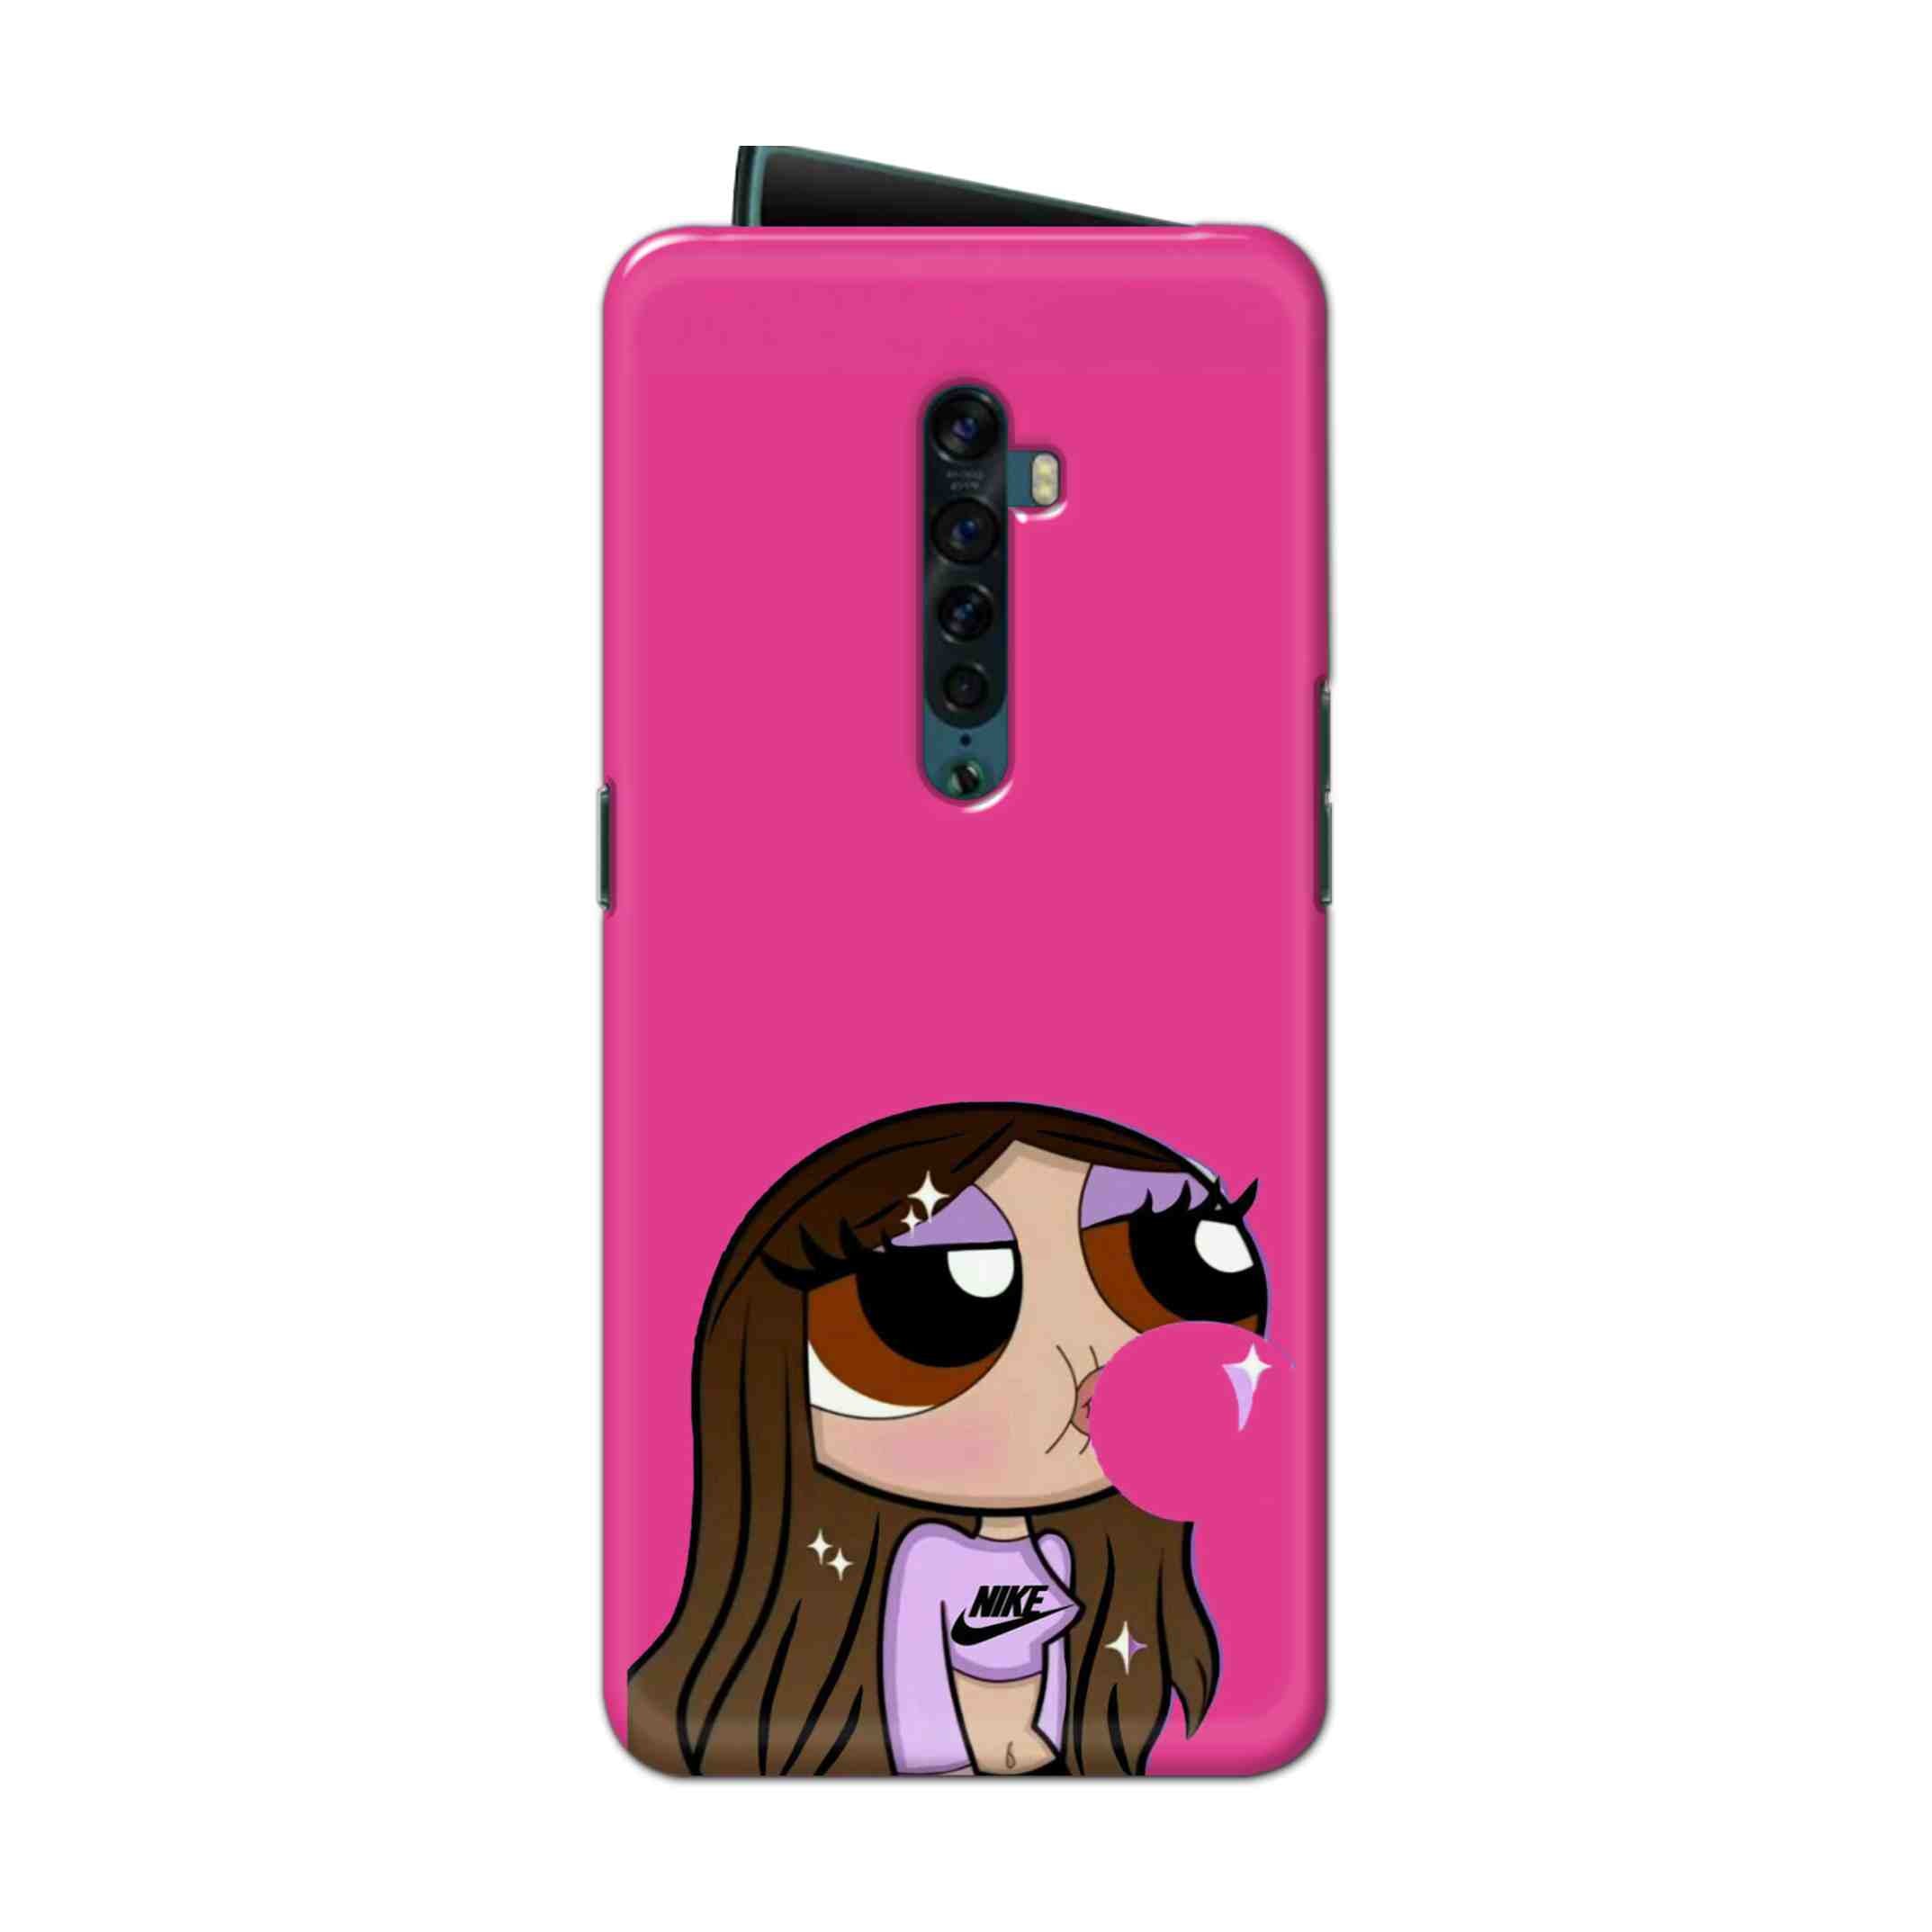 Buy Bubble Girl Hard Back Mobile Phone Case Cover For Oppo Reno 2 Online